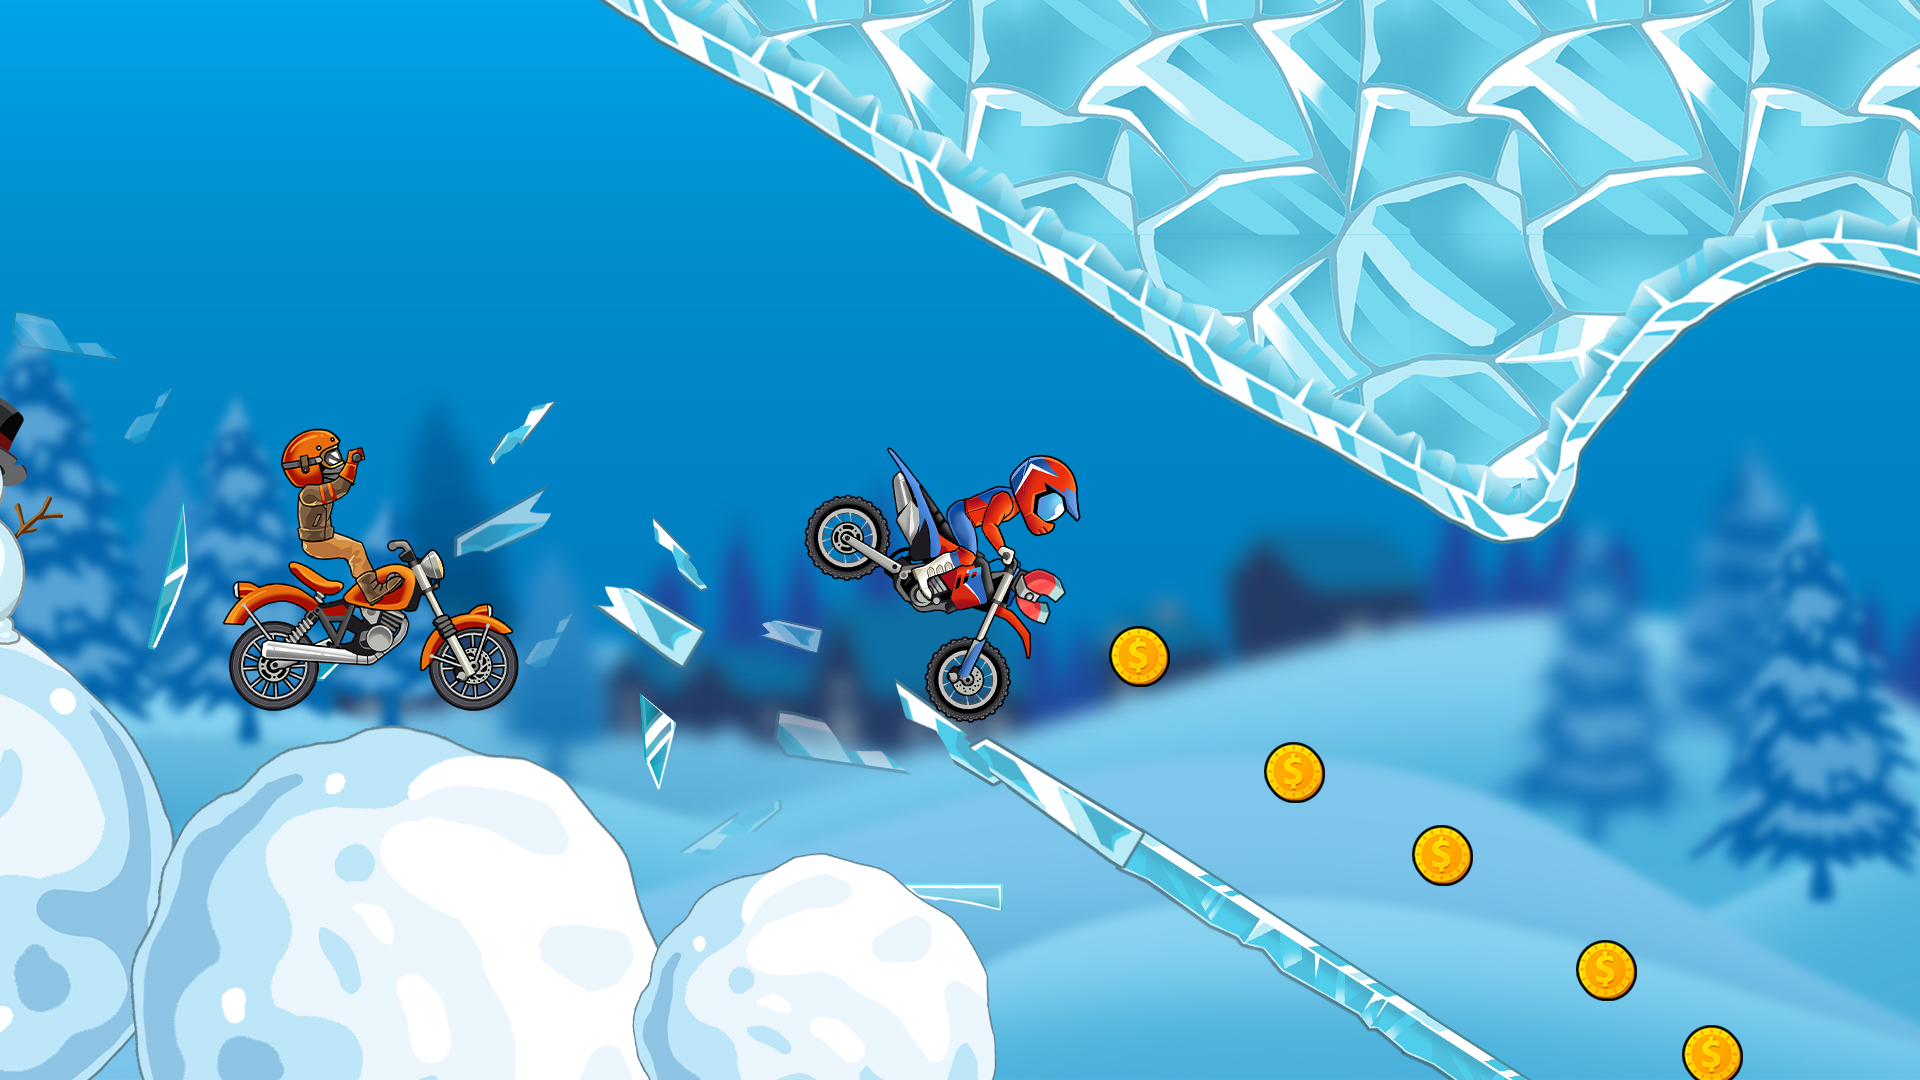 Turbo Bike: Extreme Racing - Android game screenshots.